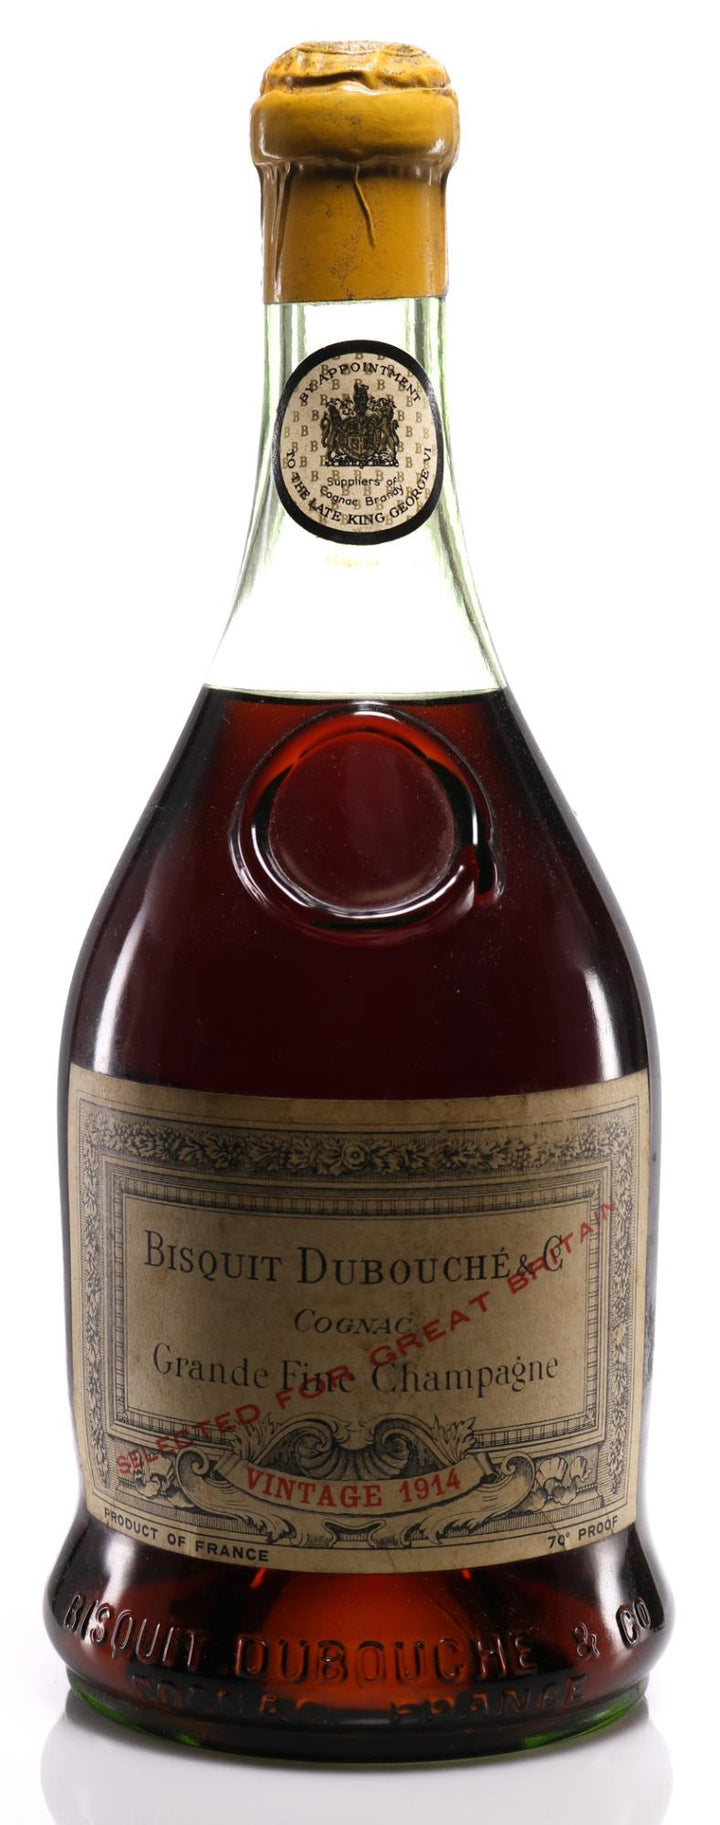 Bisquit Dubouché Grande Fine Champagne Cognac NV 1914 - Rue Pinard